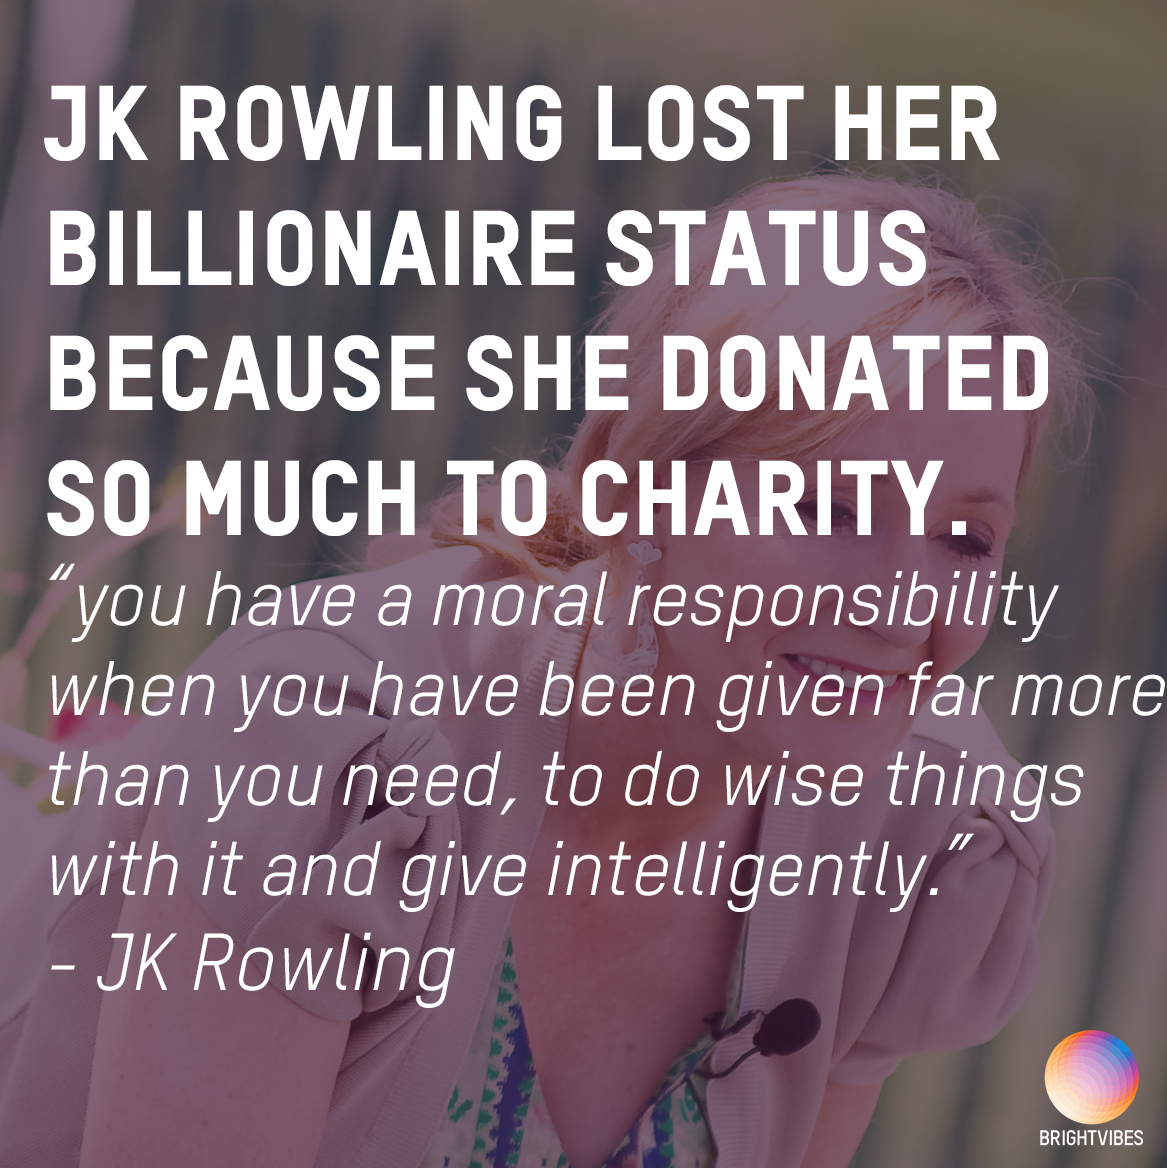 J.K. Rowling fell off the Fortune Billionaire list